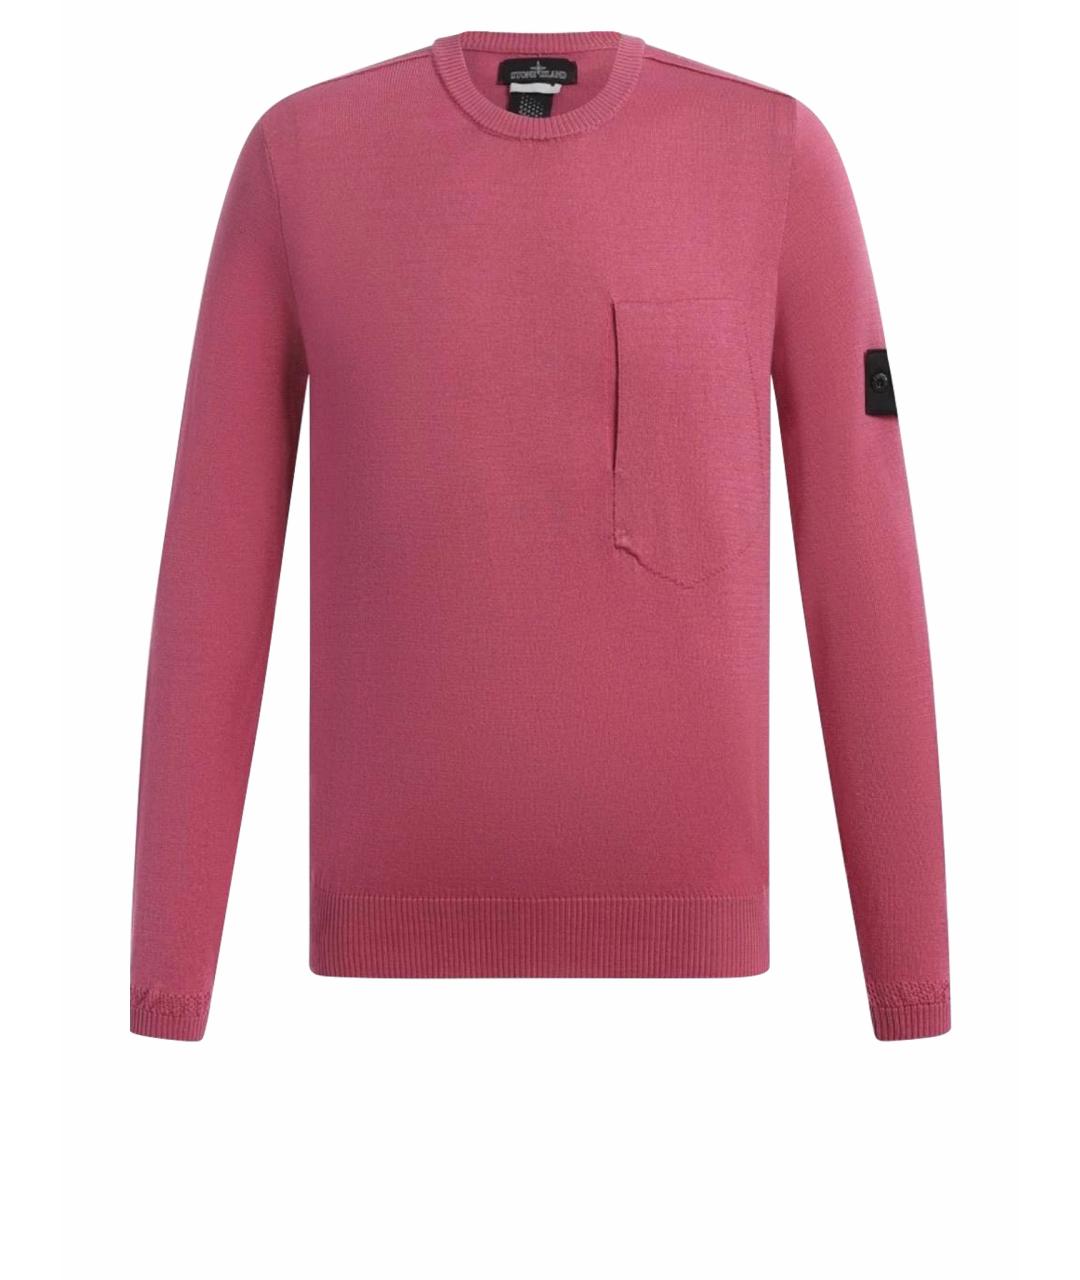 STONE ISLAND SHADOW PROJECT Розовый хлопковый джемпер / свитер, фото 1